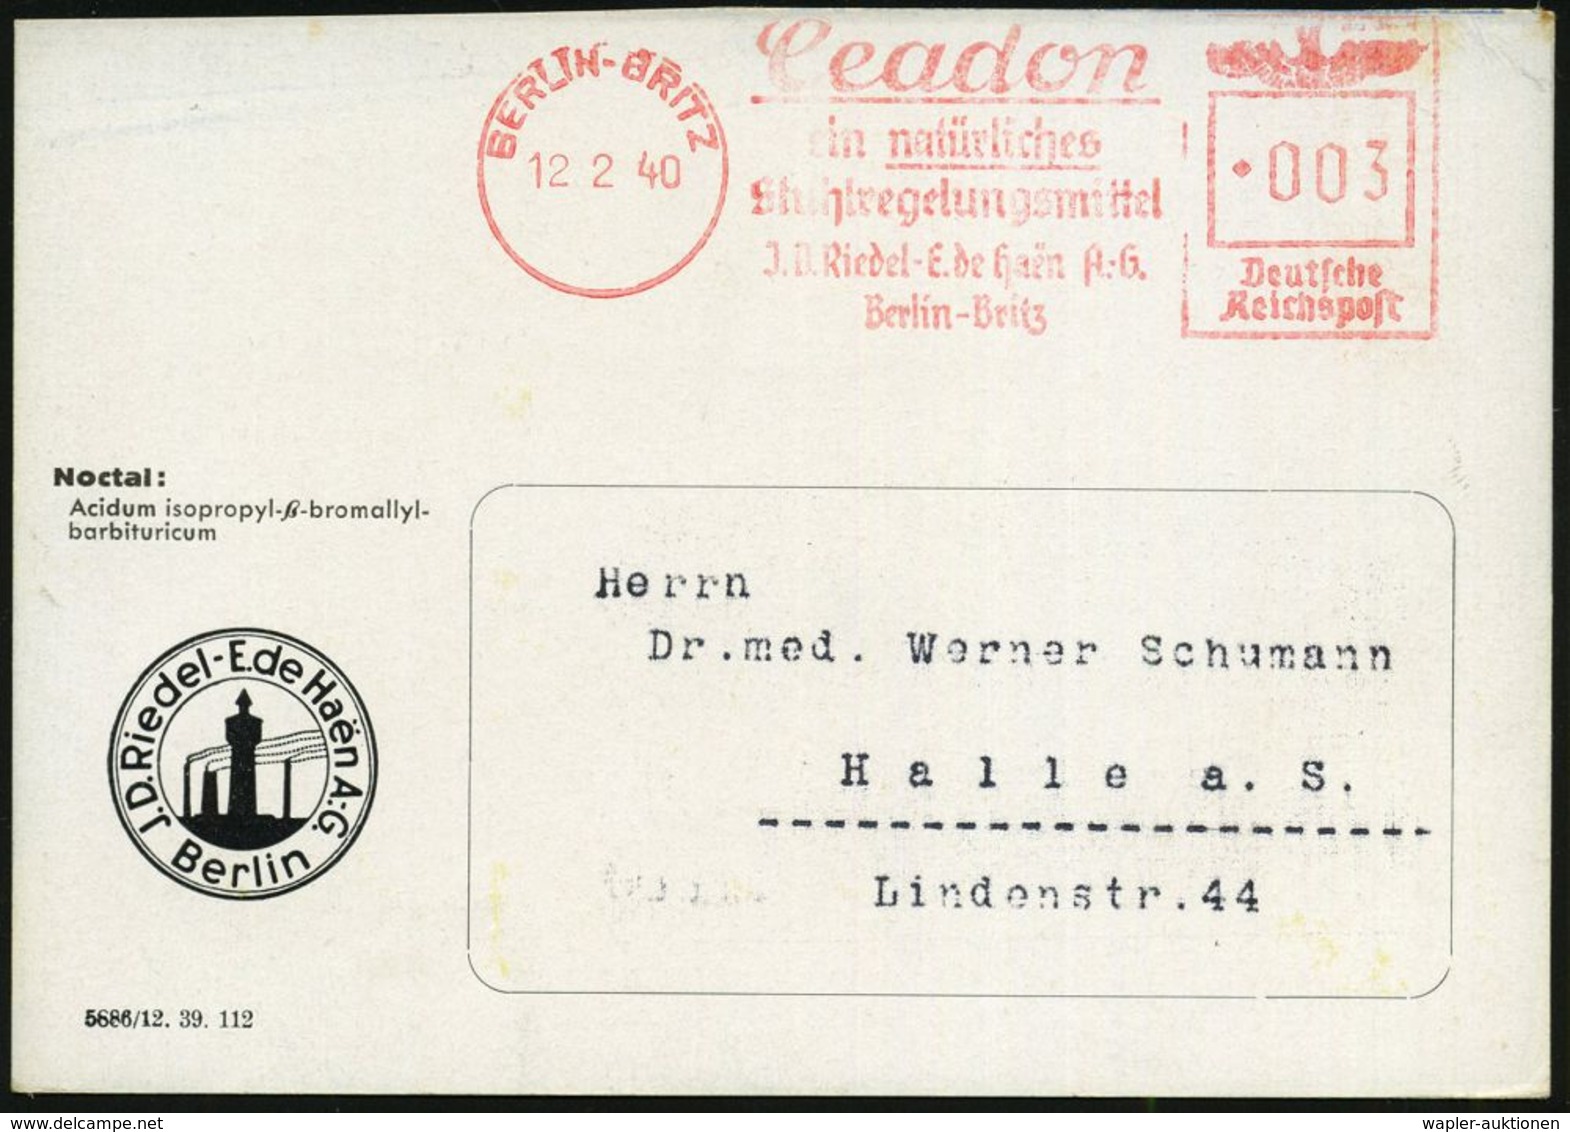 BERLIN-BRITZ #bzw.# BERLIN-BRITZ 1/ Ceadon/ Ein Natürliches/ Stuhlregelungsmittel/ J.D.Riedel-E.de Haen AG 1940 (Feb./Mr - Médecine